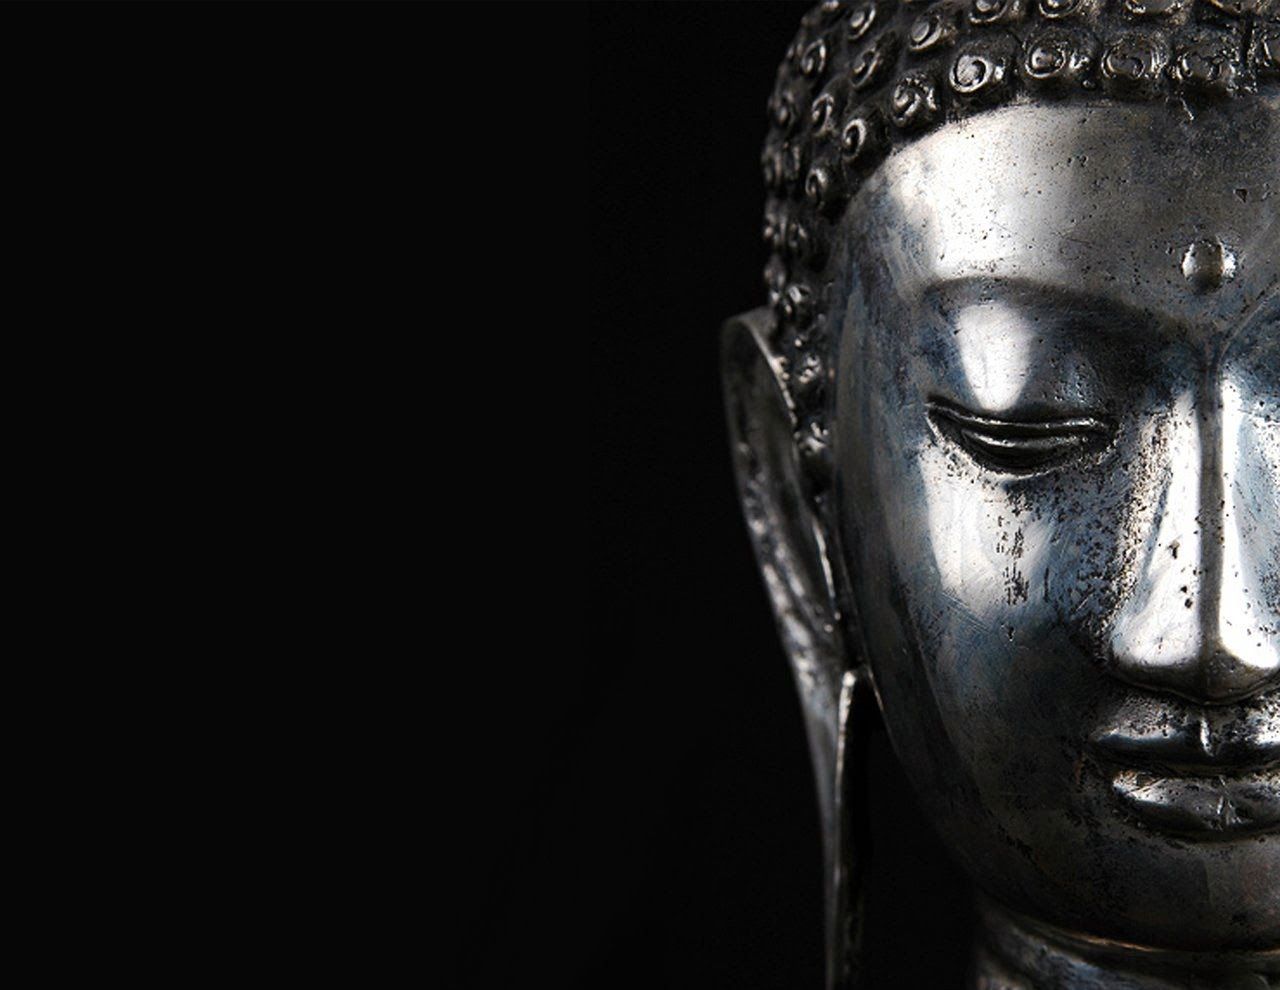 Brass Buddha Figurine on Black Surface · Free Stock Photo